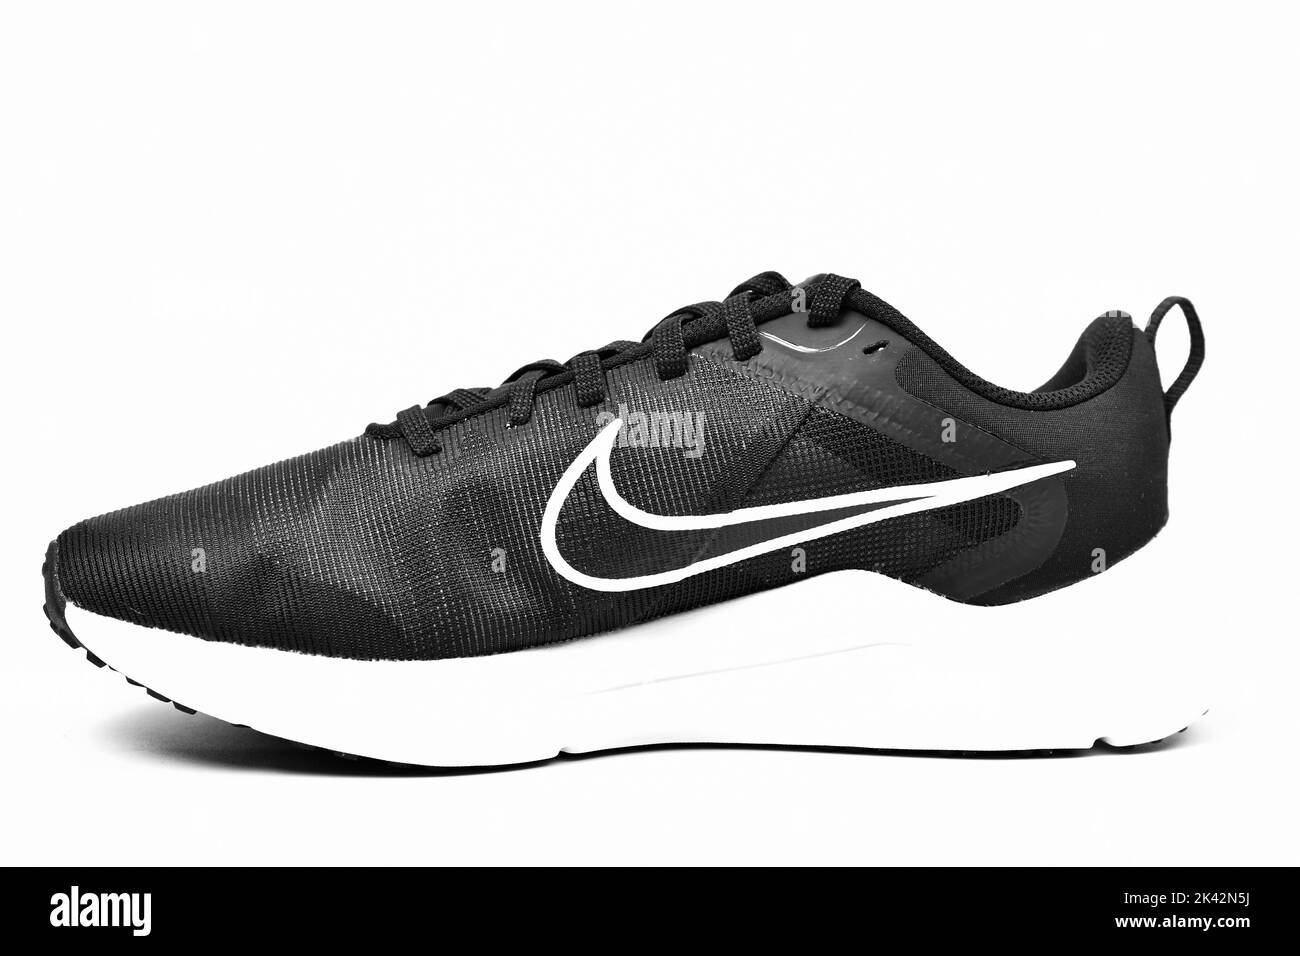 New Delhi, India - 29 September 2022 : Nike Running Shoe Isolated on White Background Stock Photo